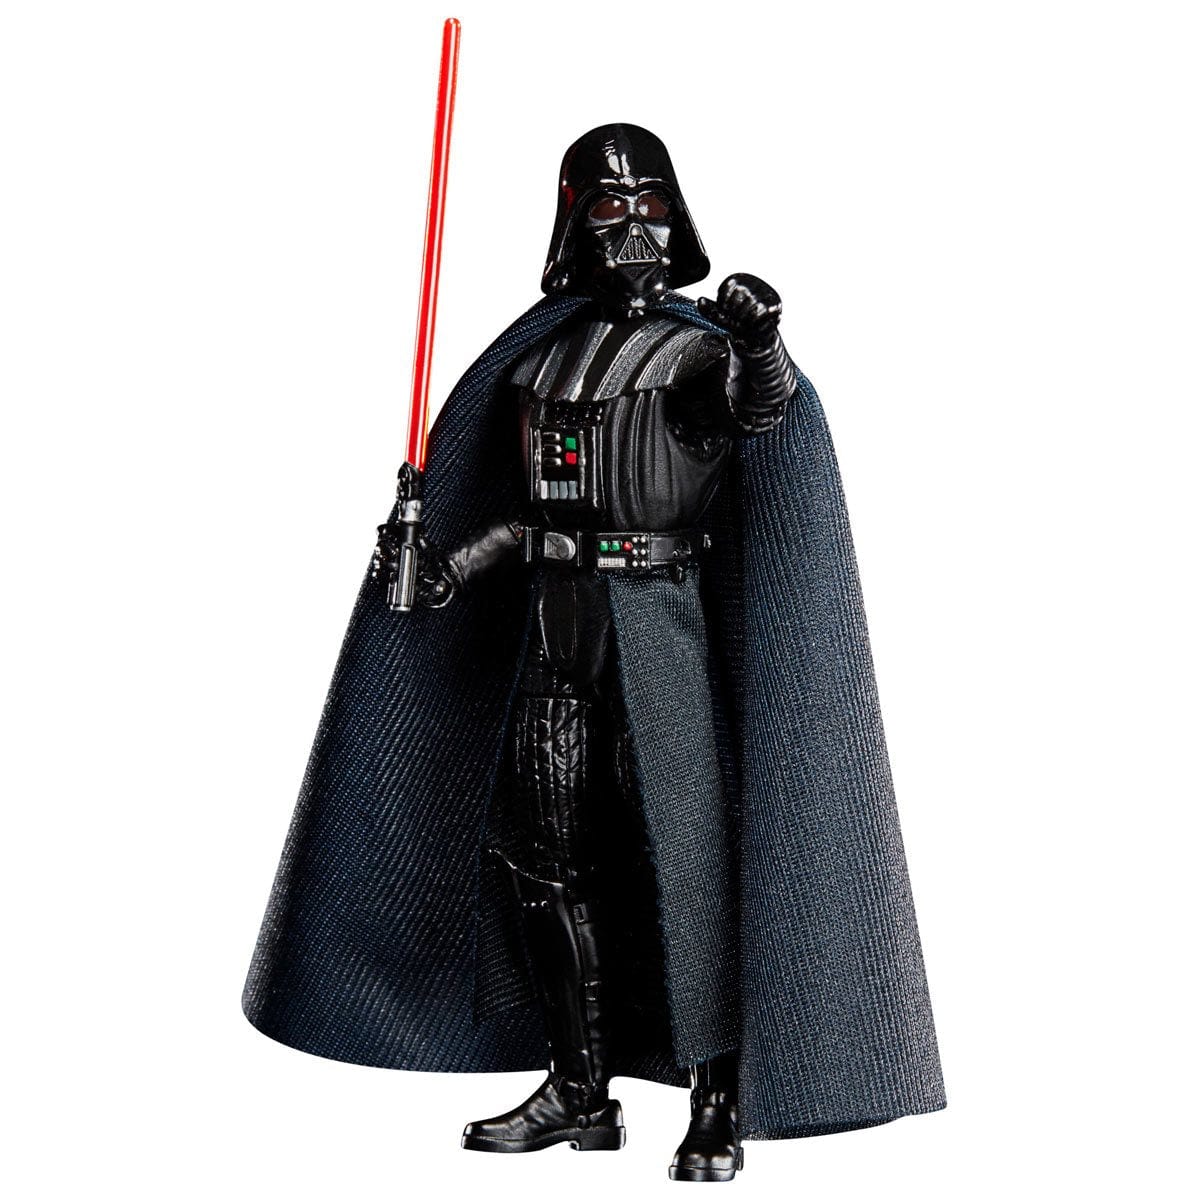 Darth Vader (Dark Times) 3.75-inch Figure - Star Wars The Vintage Collection Pop-O-Loco